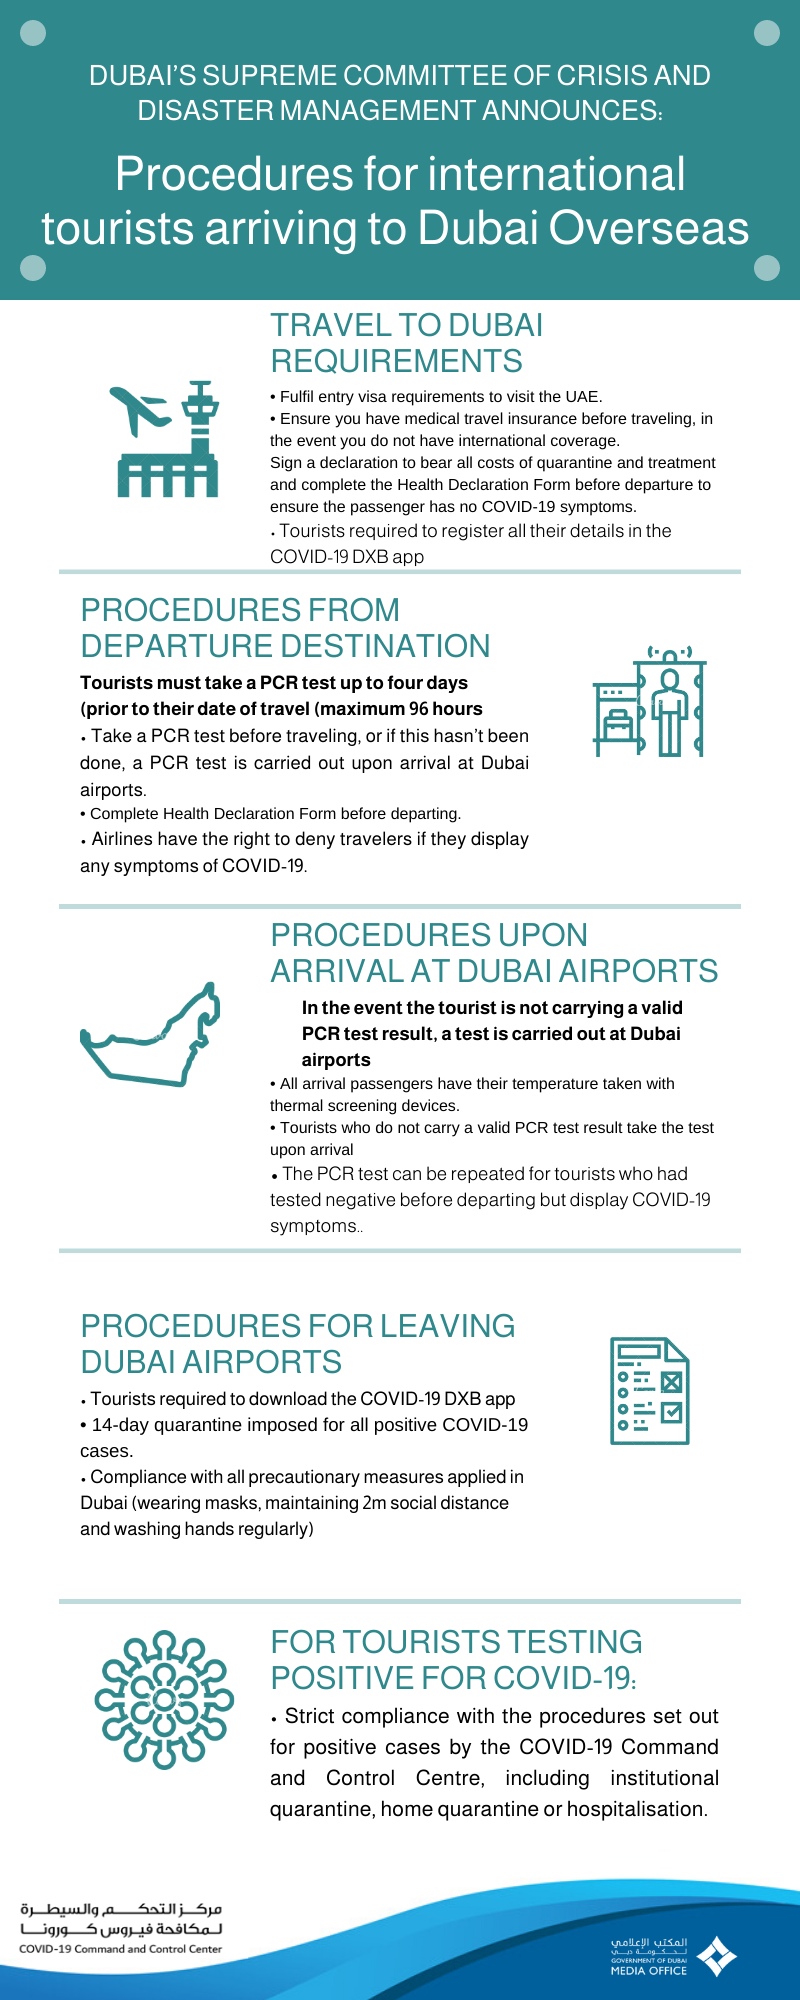 procedure for international tourists to Dubai overseas